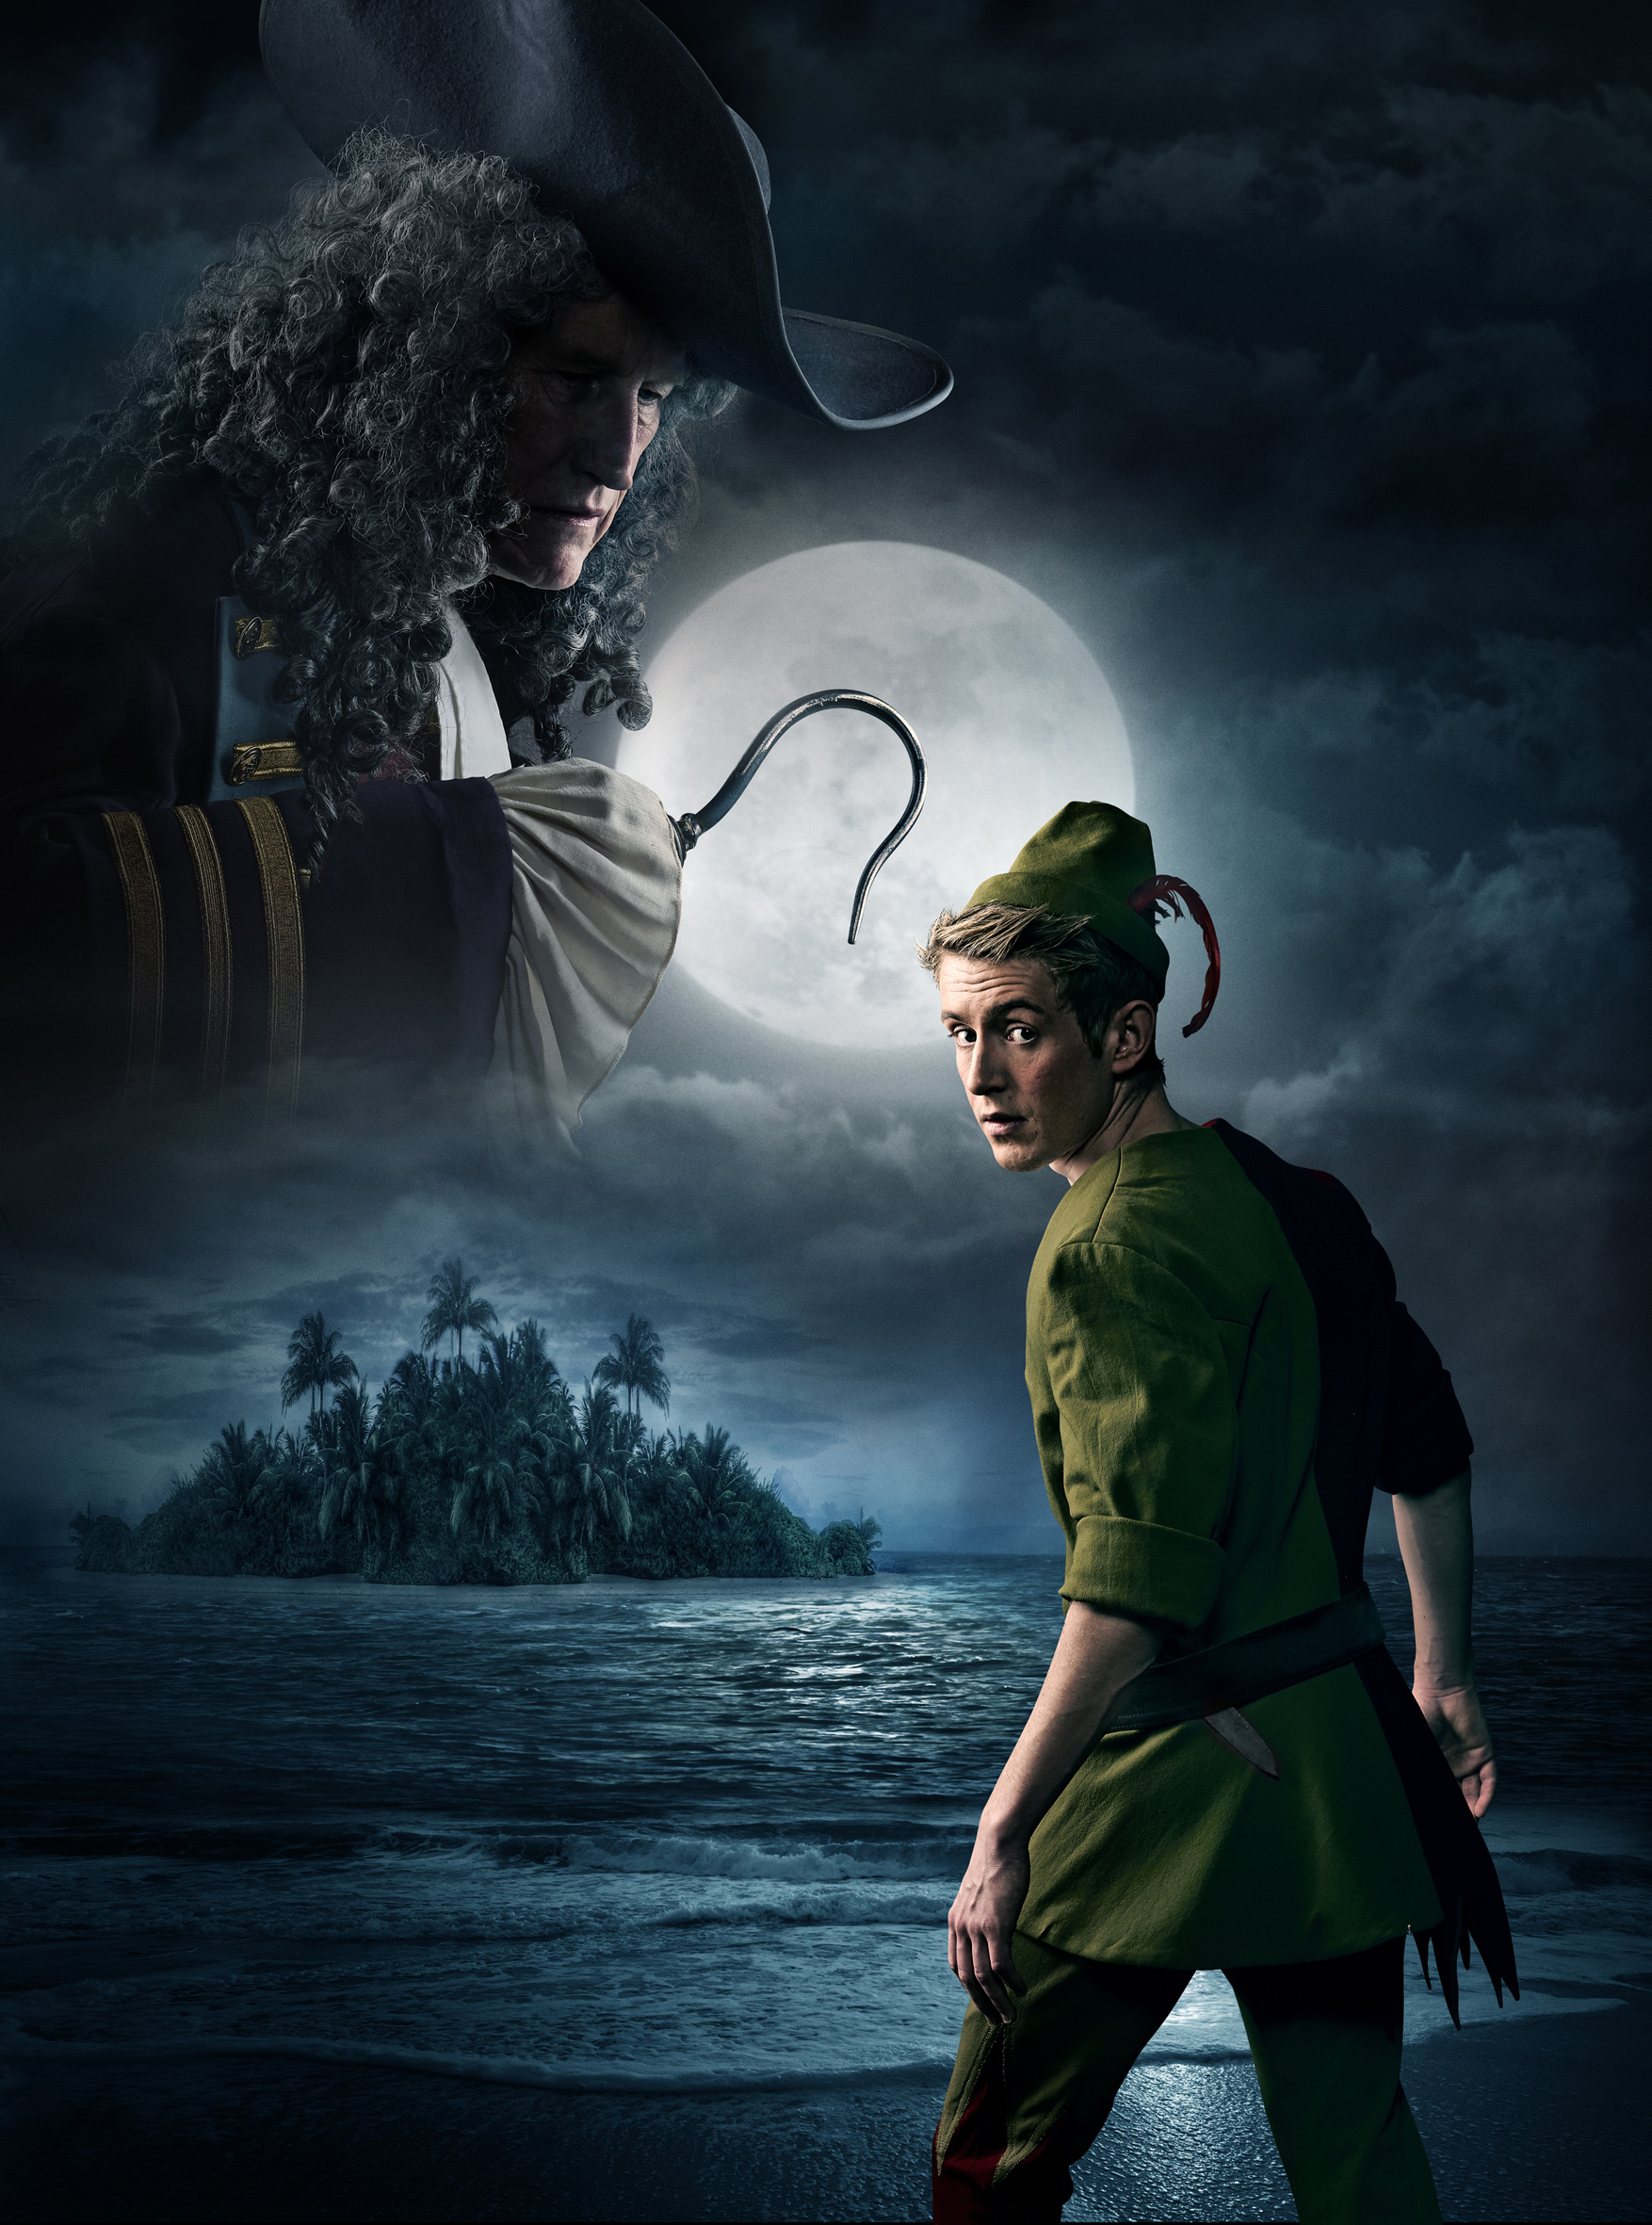 Peter Pan and Hook